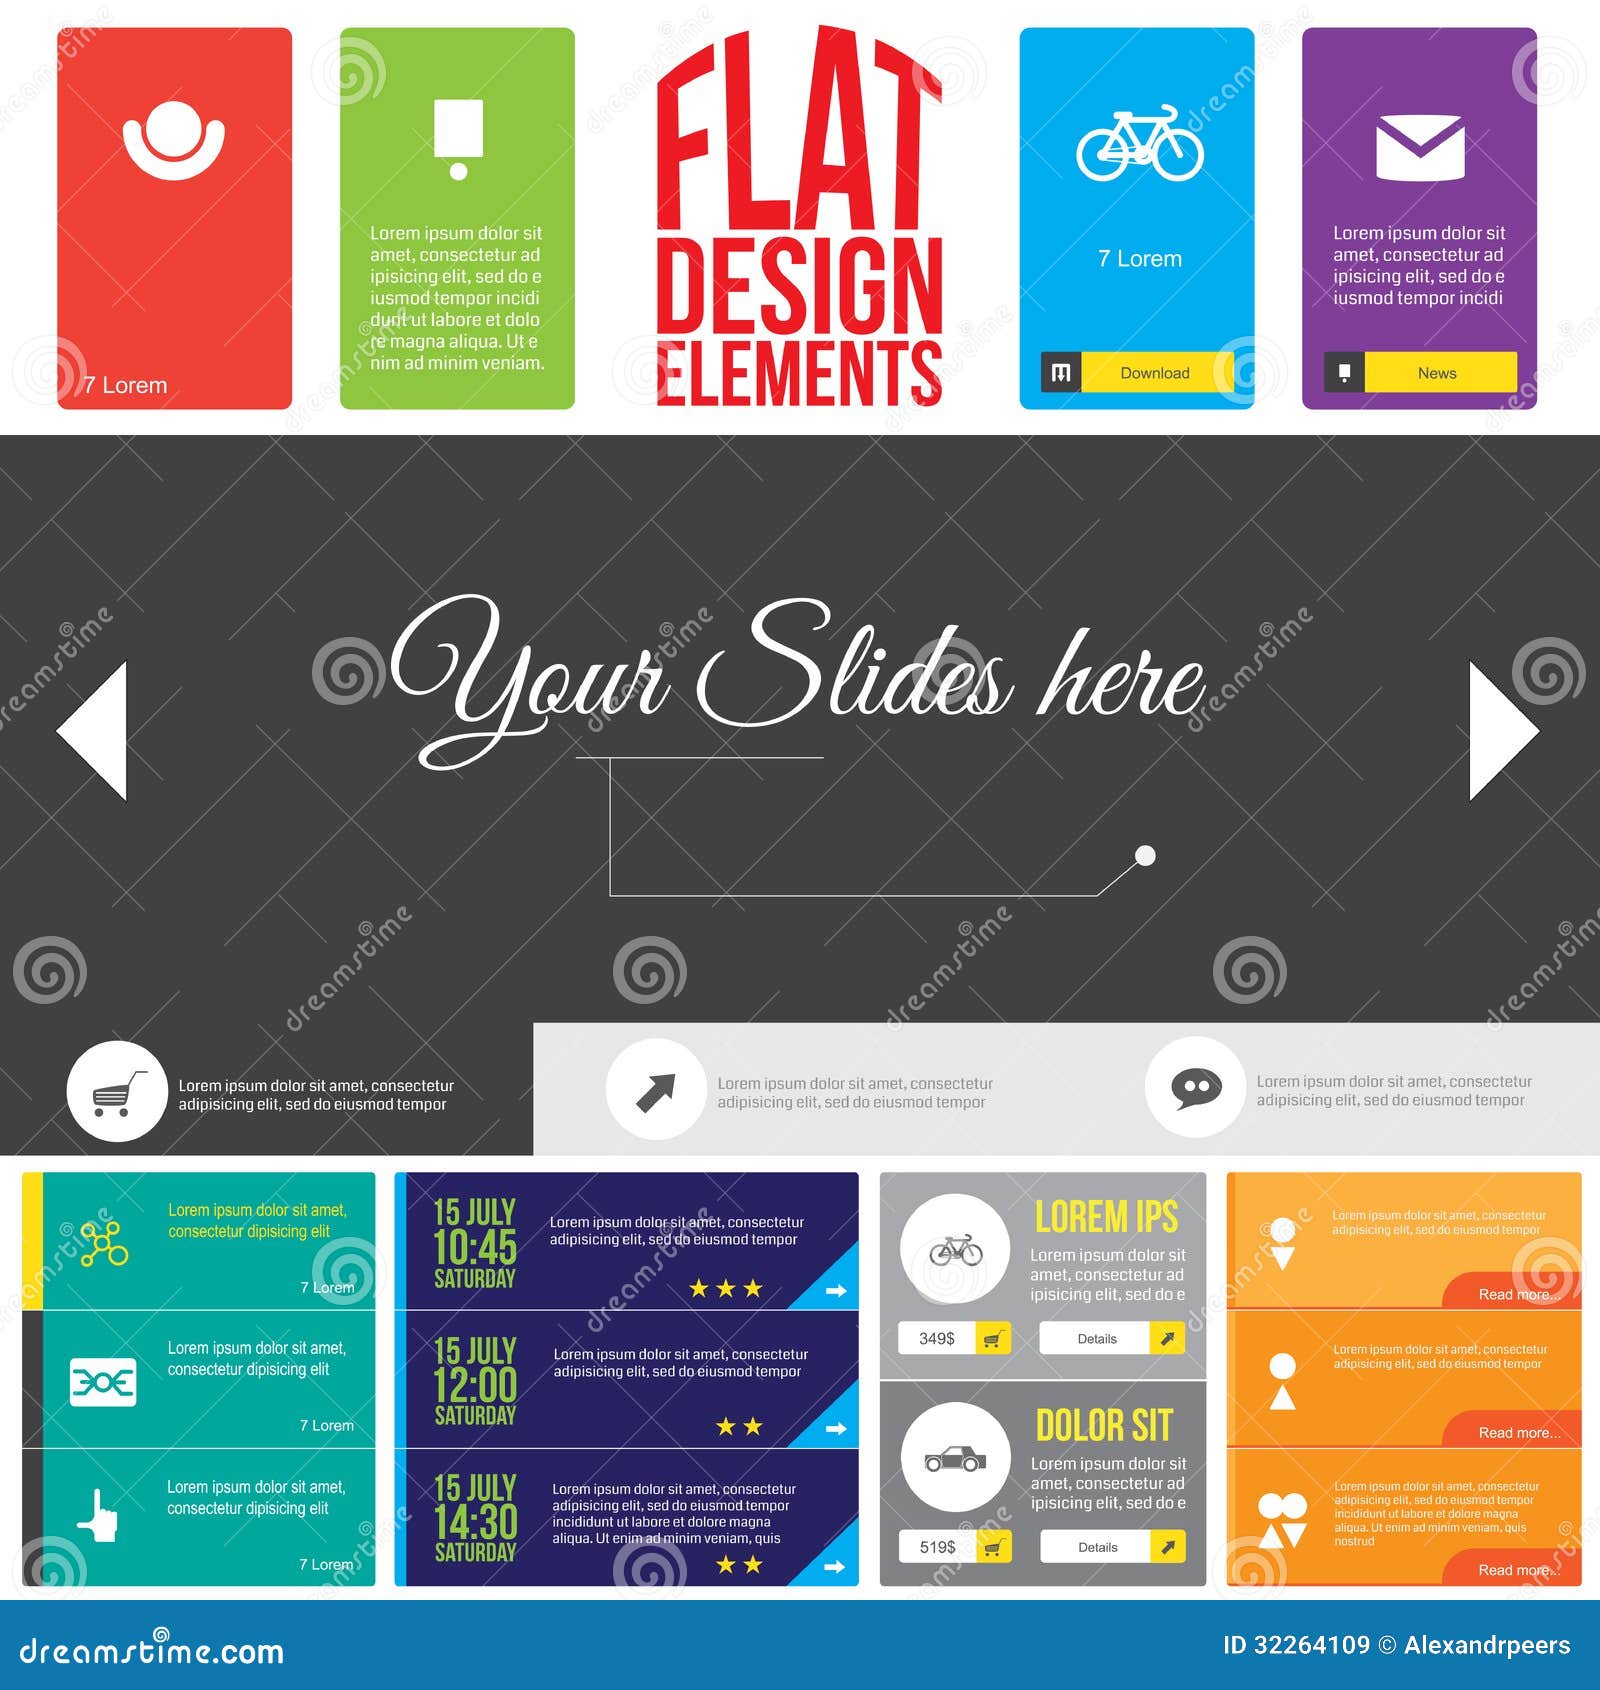 Flat Web Design Elements Royalty Free Stock Images 